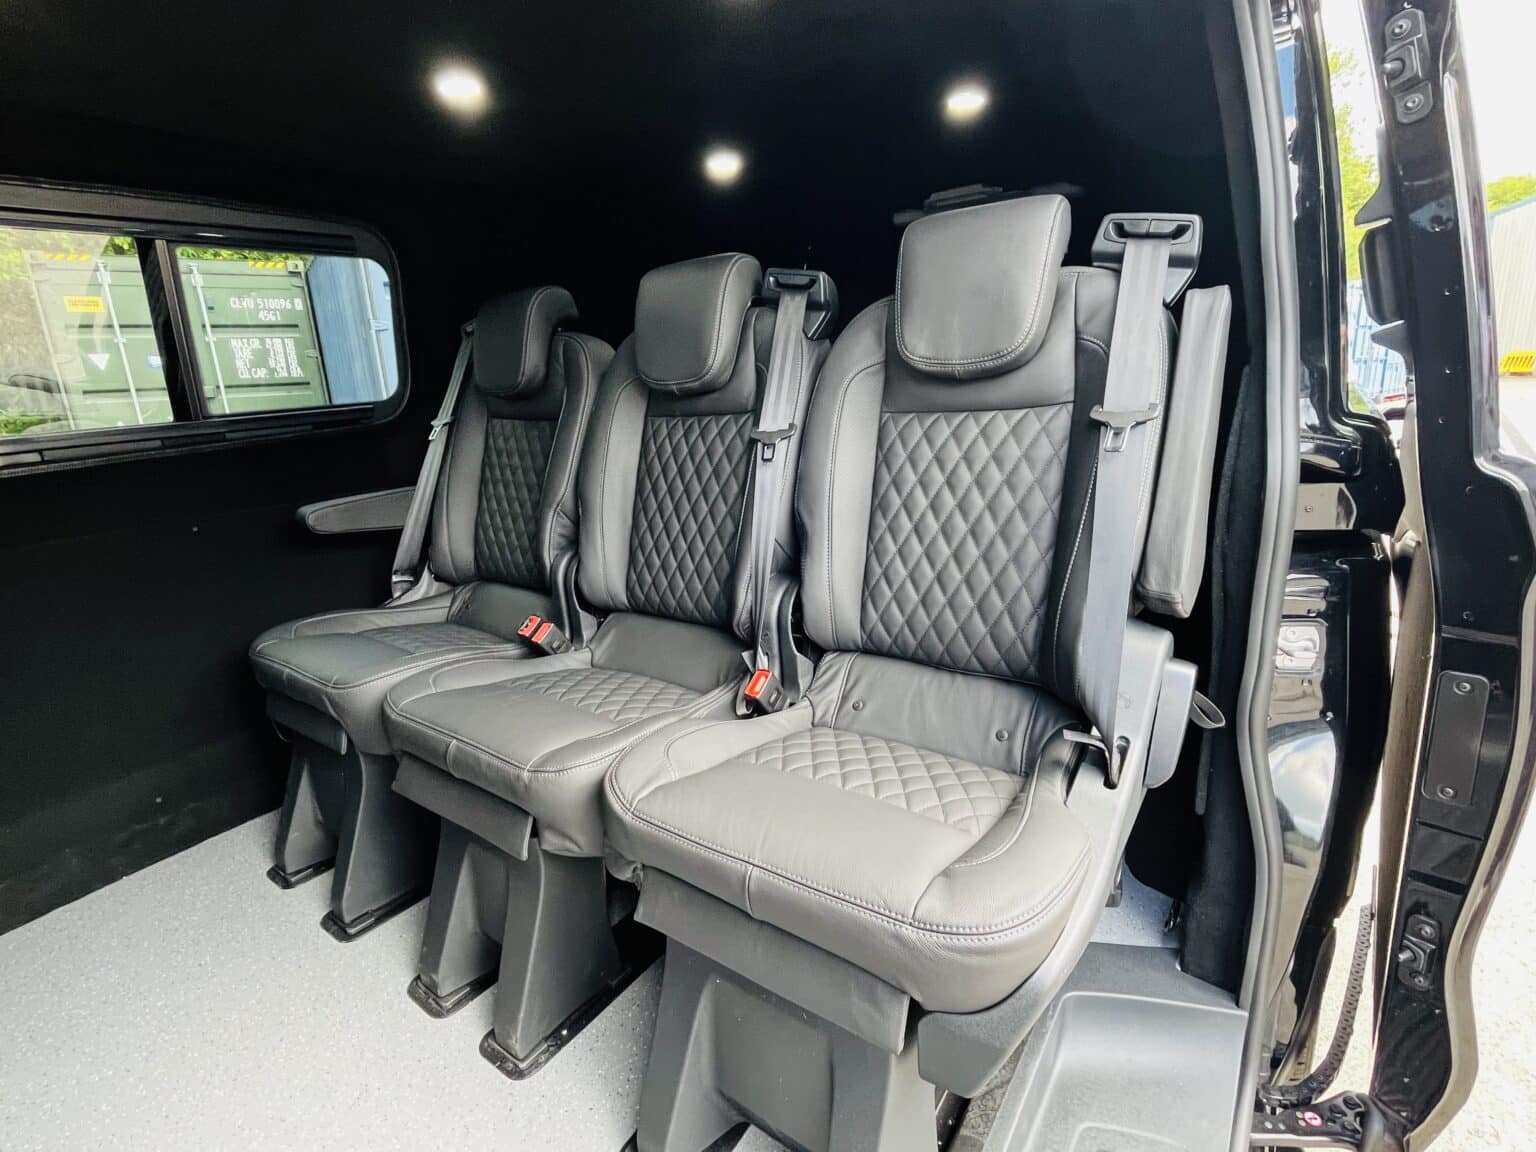 Transit Custom Crew Cab Q Sport by Quadrant Vehicles